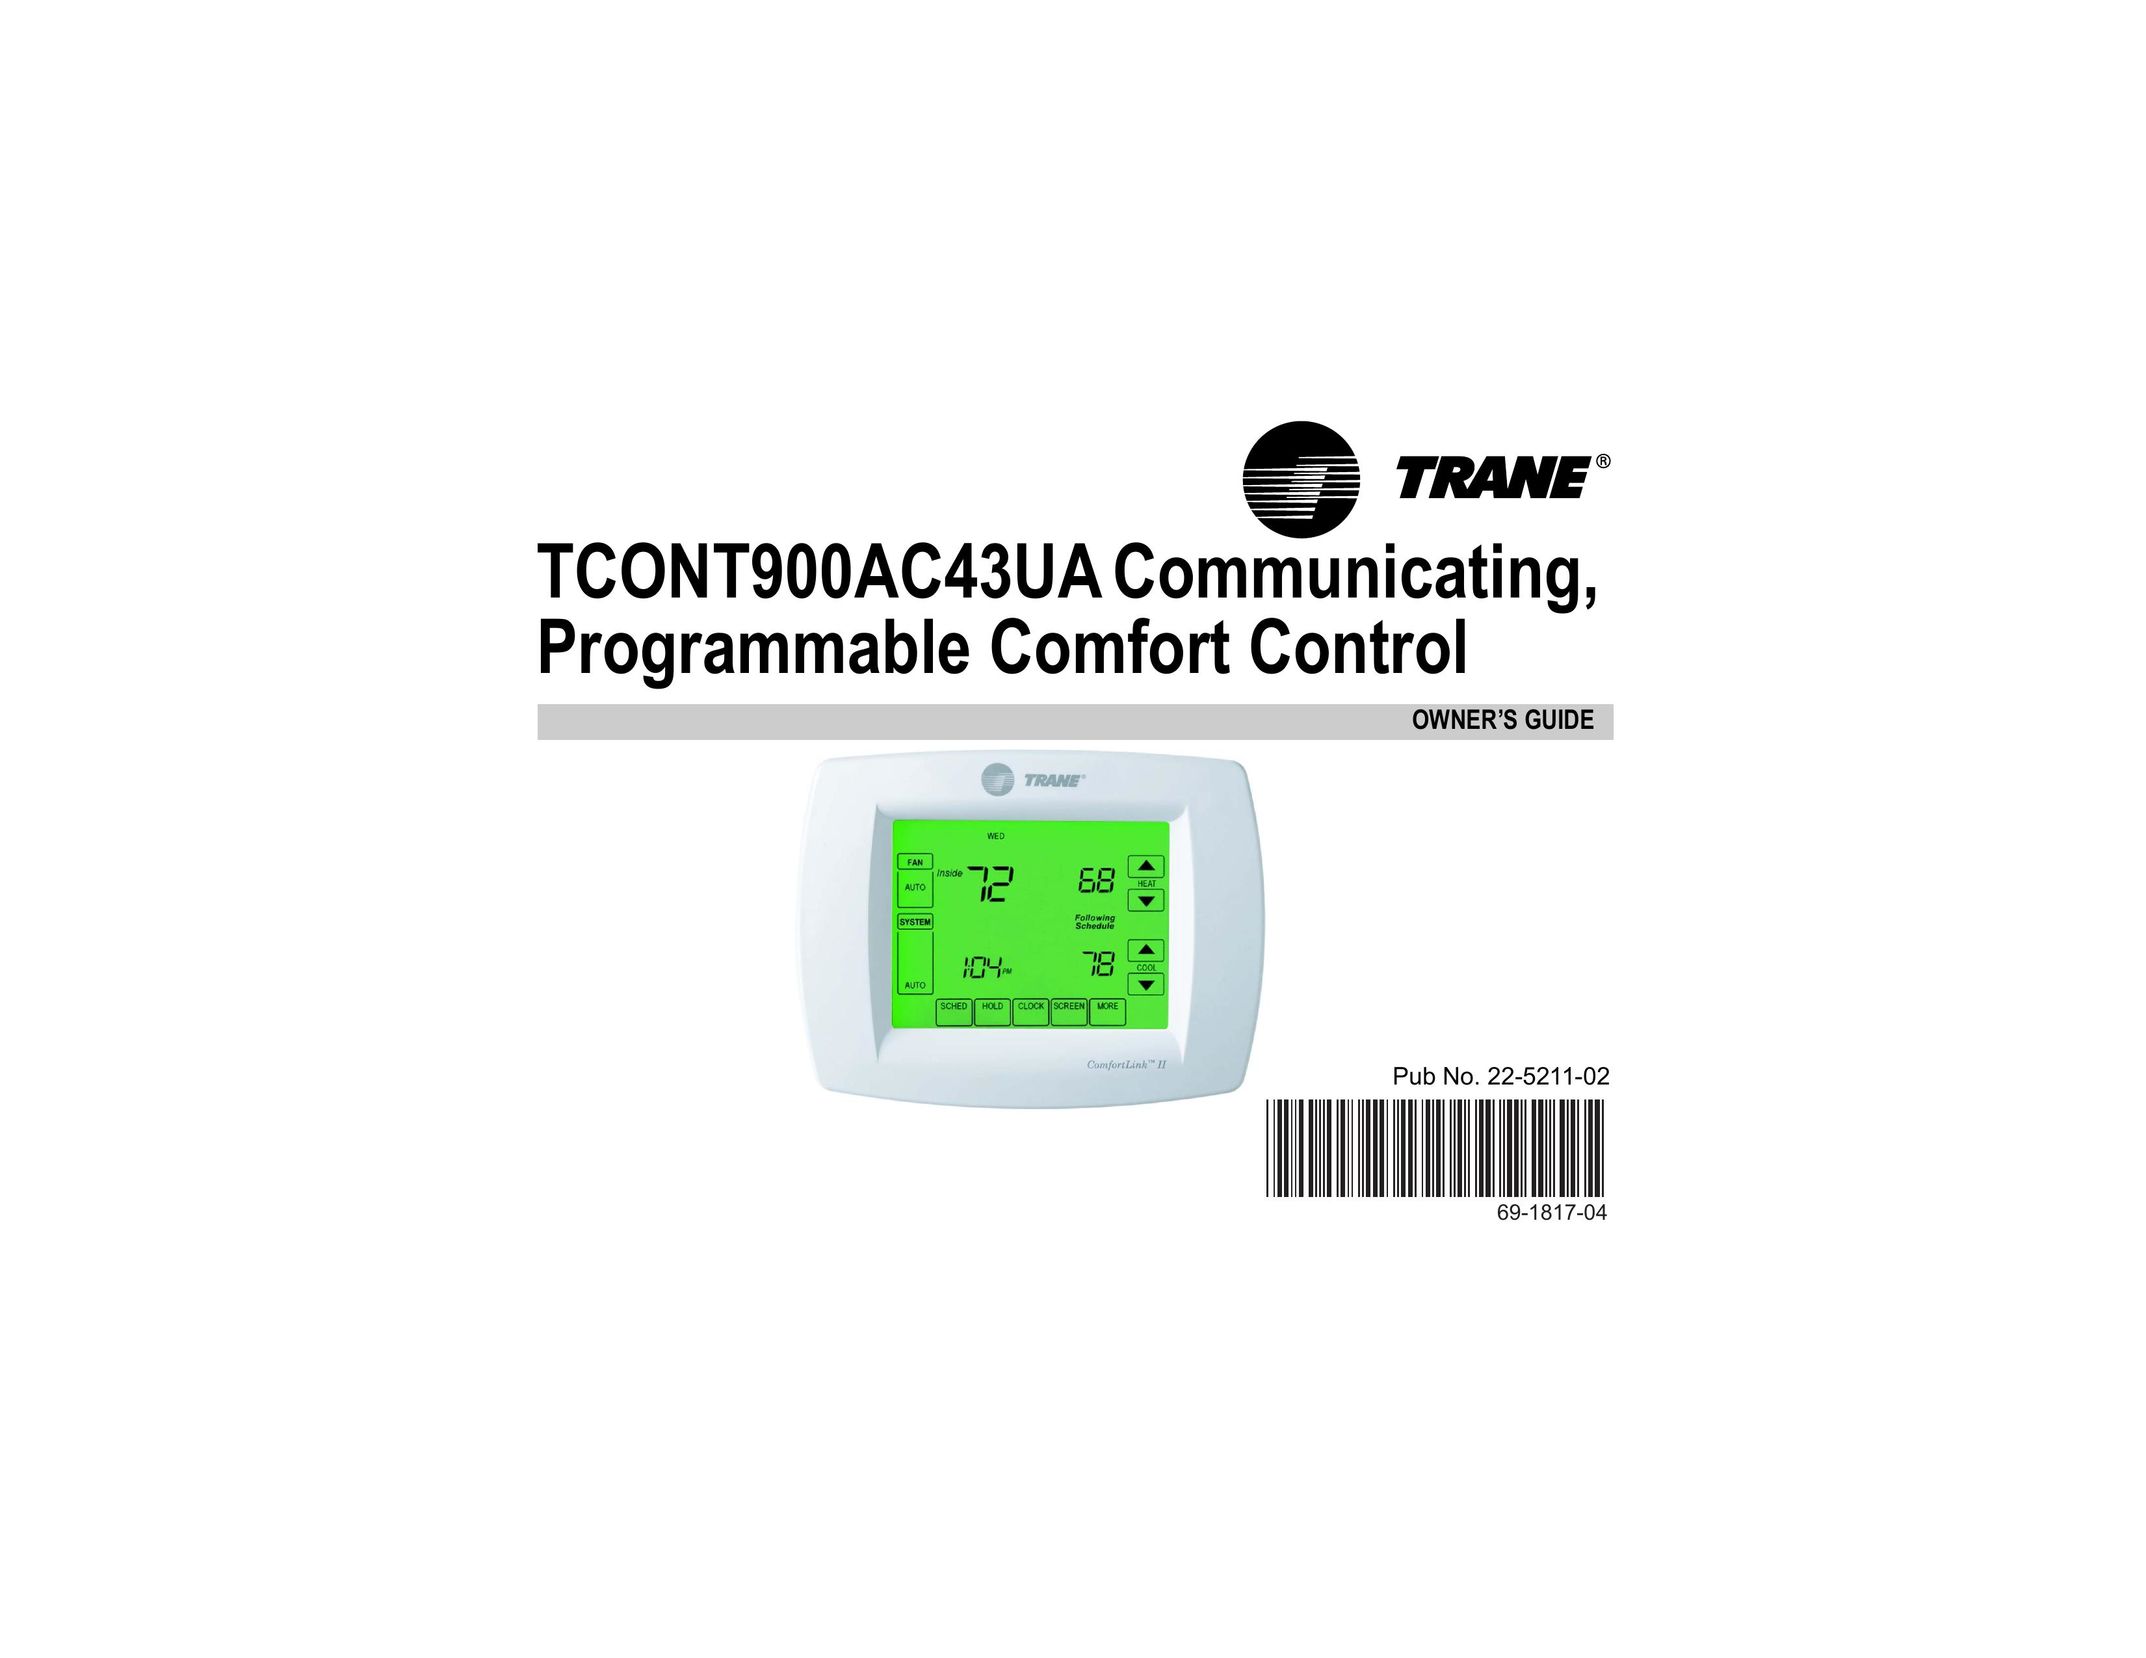 Trane TCONT900AC43UA Thermostat User Manual